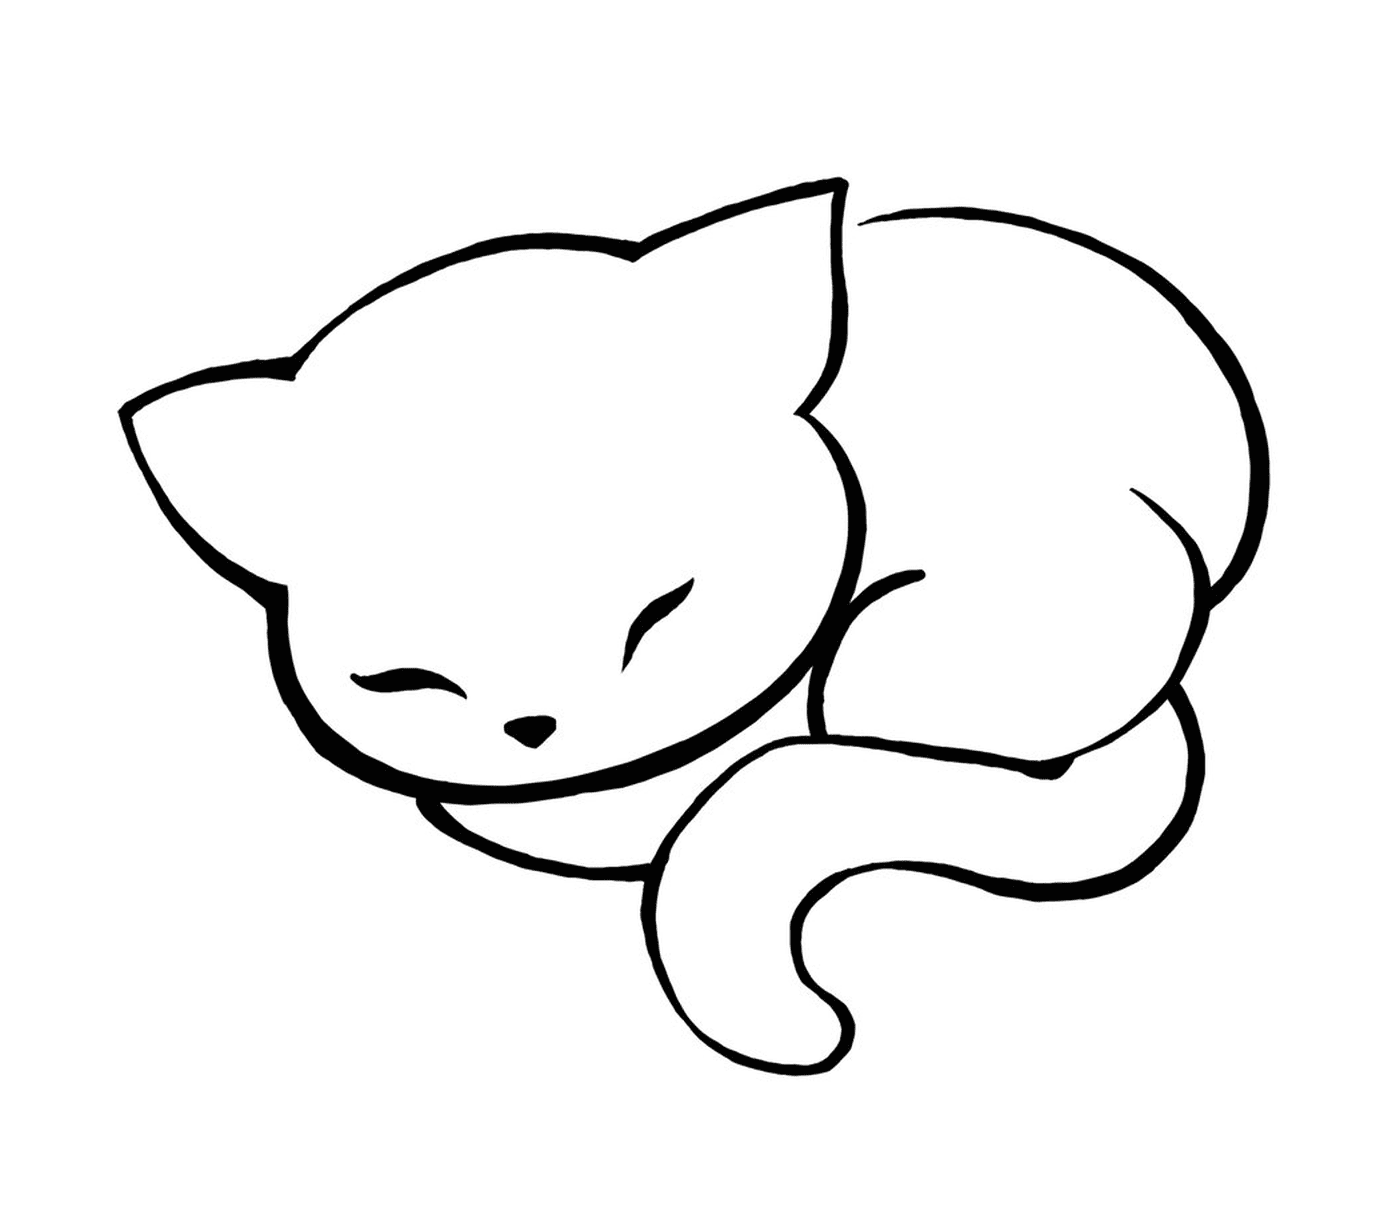  A sleeping cat 